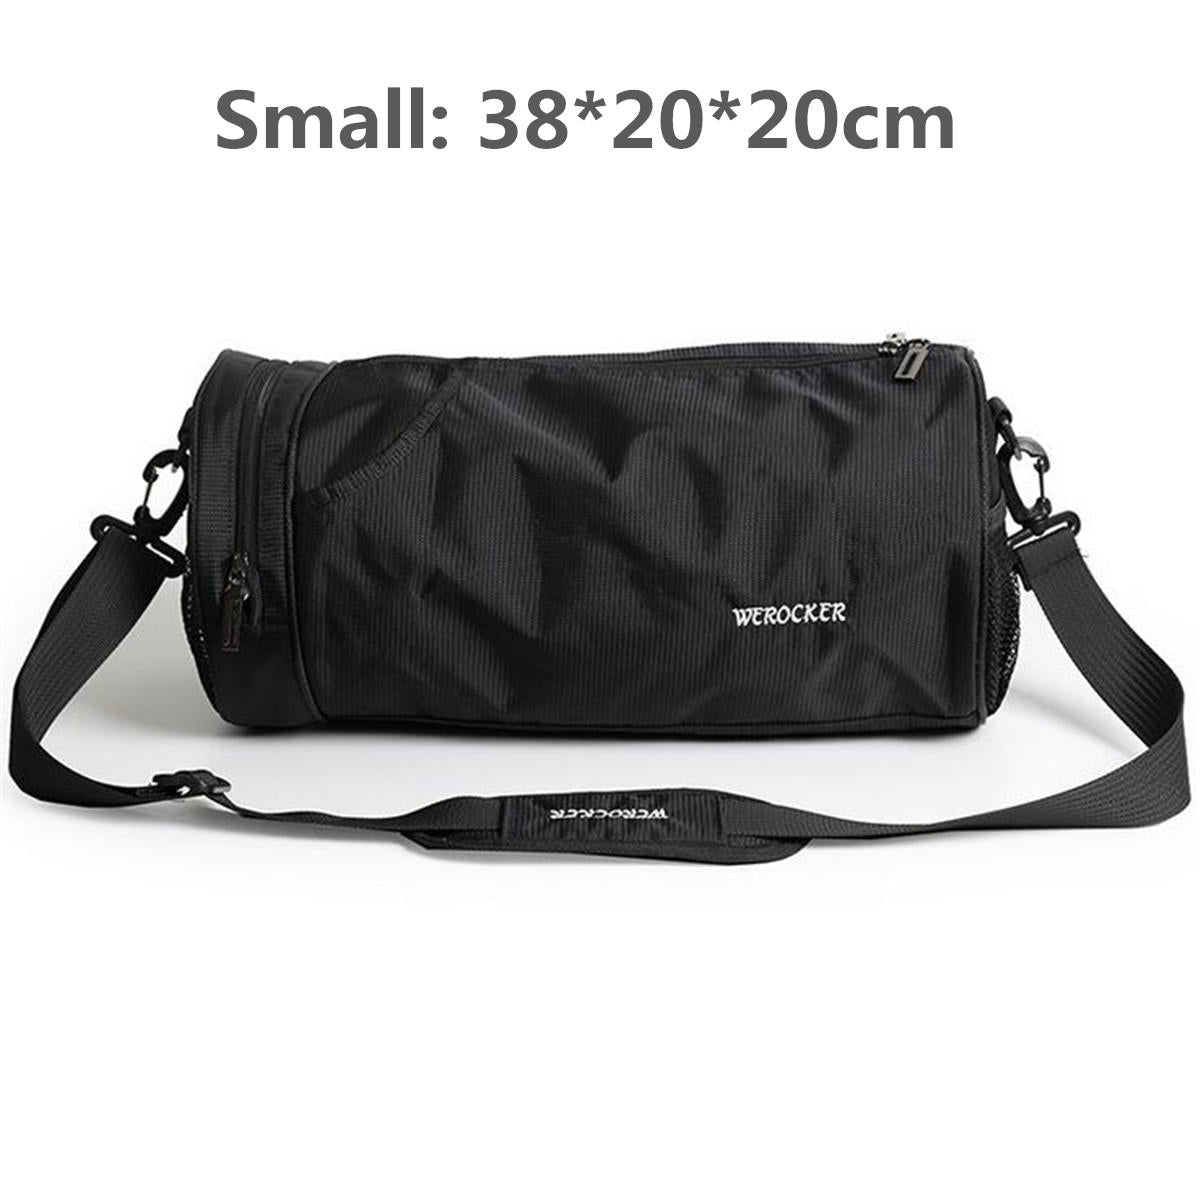 Outdoor Sport Gym Duffle Backpack Luggage Travel Fitness Shoulder Bag Shoes Basketball Storage Organizer